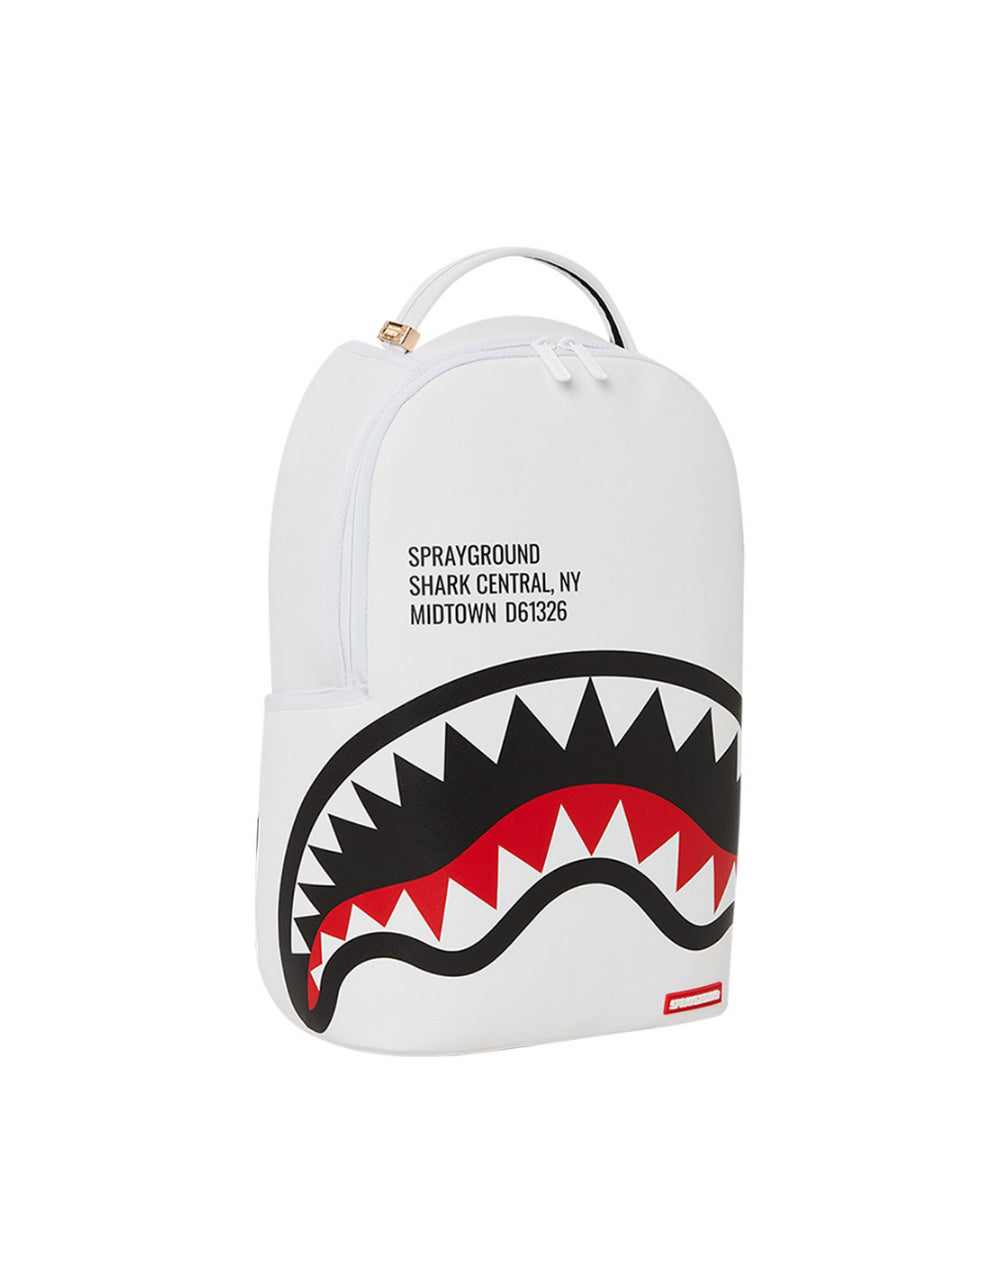 Highly Detailed Constructed Shark Bite sprayground backpack